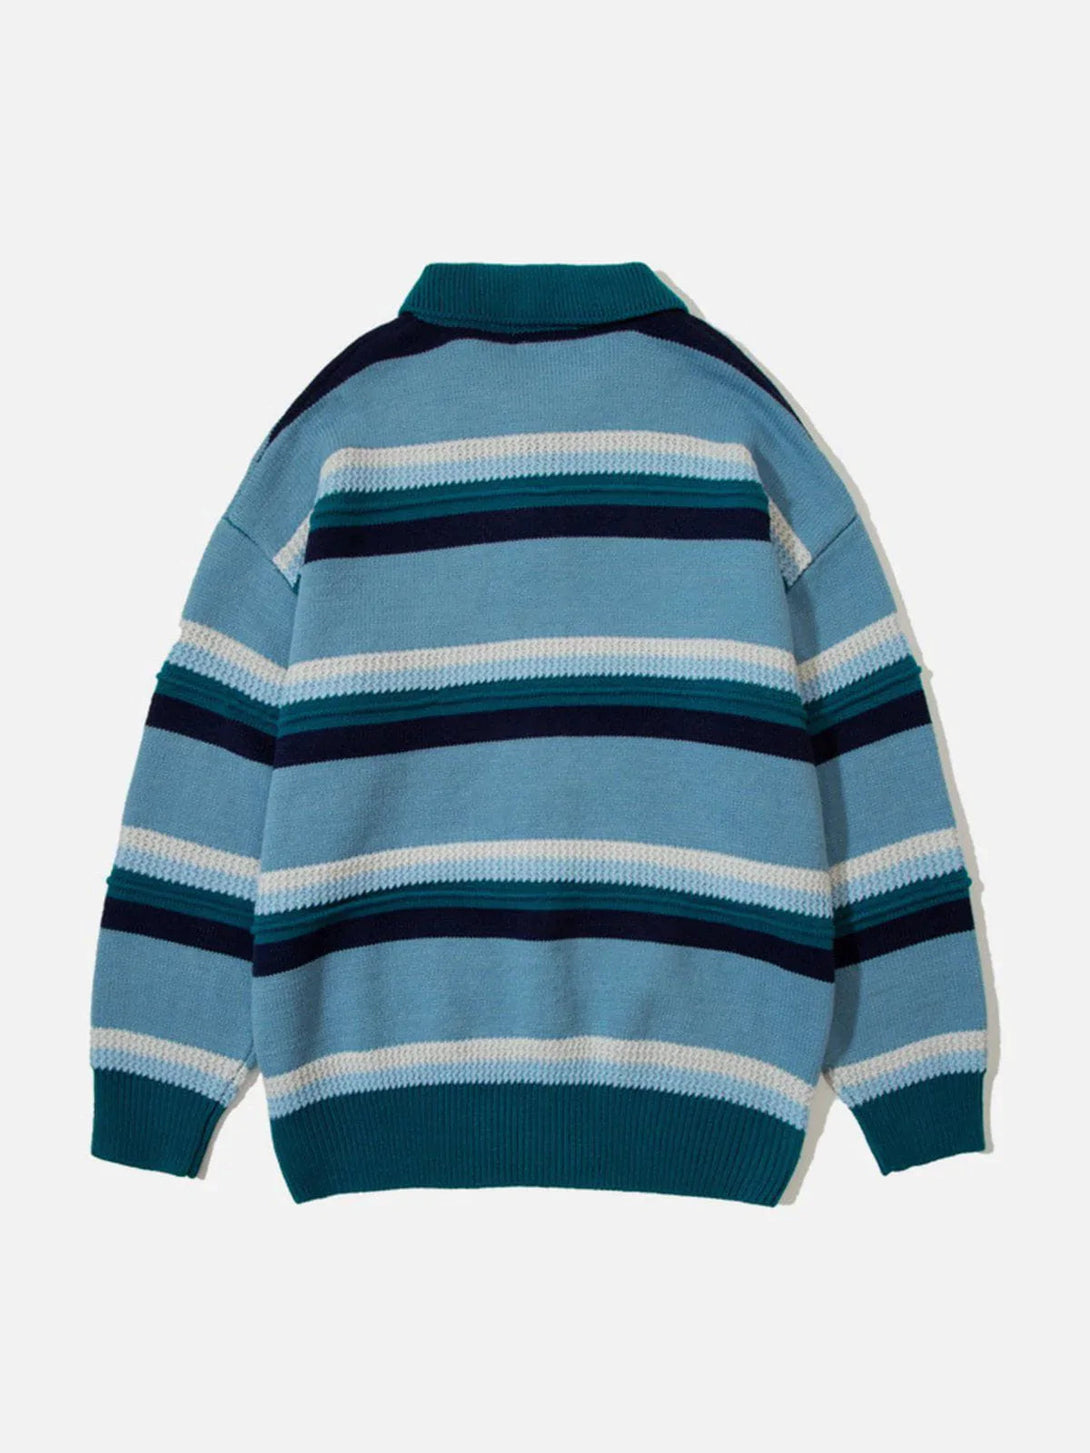 Majesda® - Vintage Striped POLO Sweater outfit ideas streetwear fashion